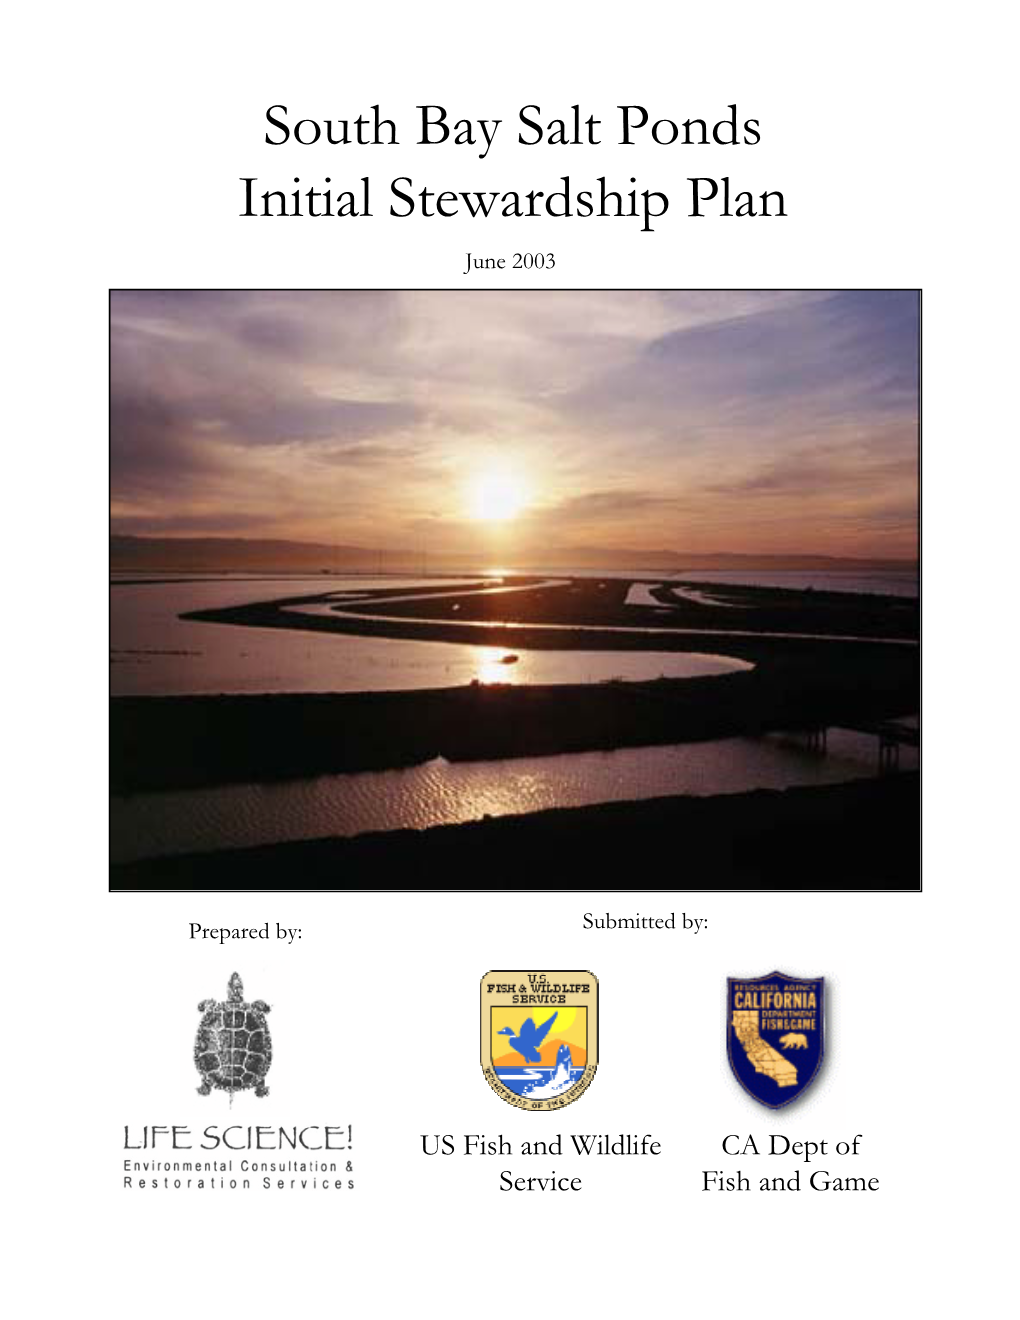 South Bay Salt Ponds Initial Stewardship Plan June 2003